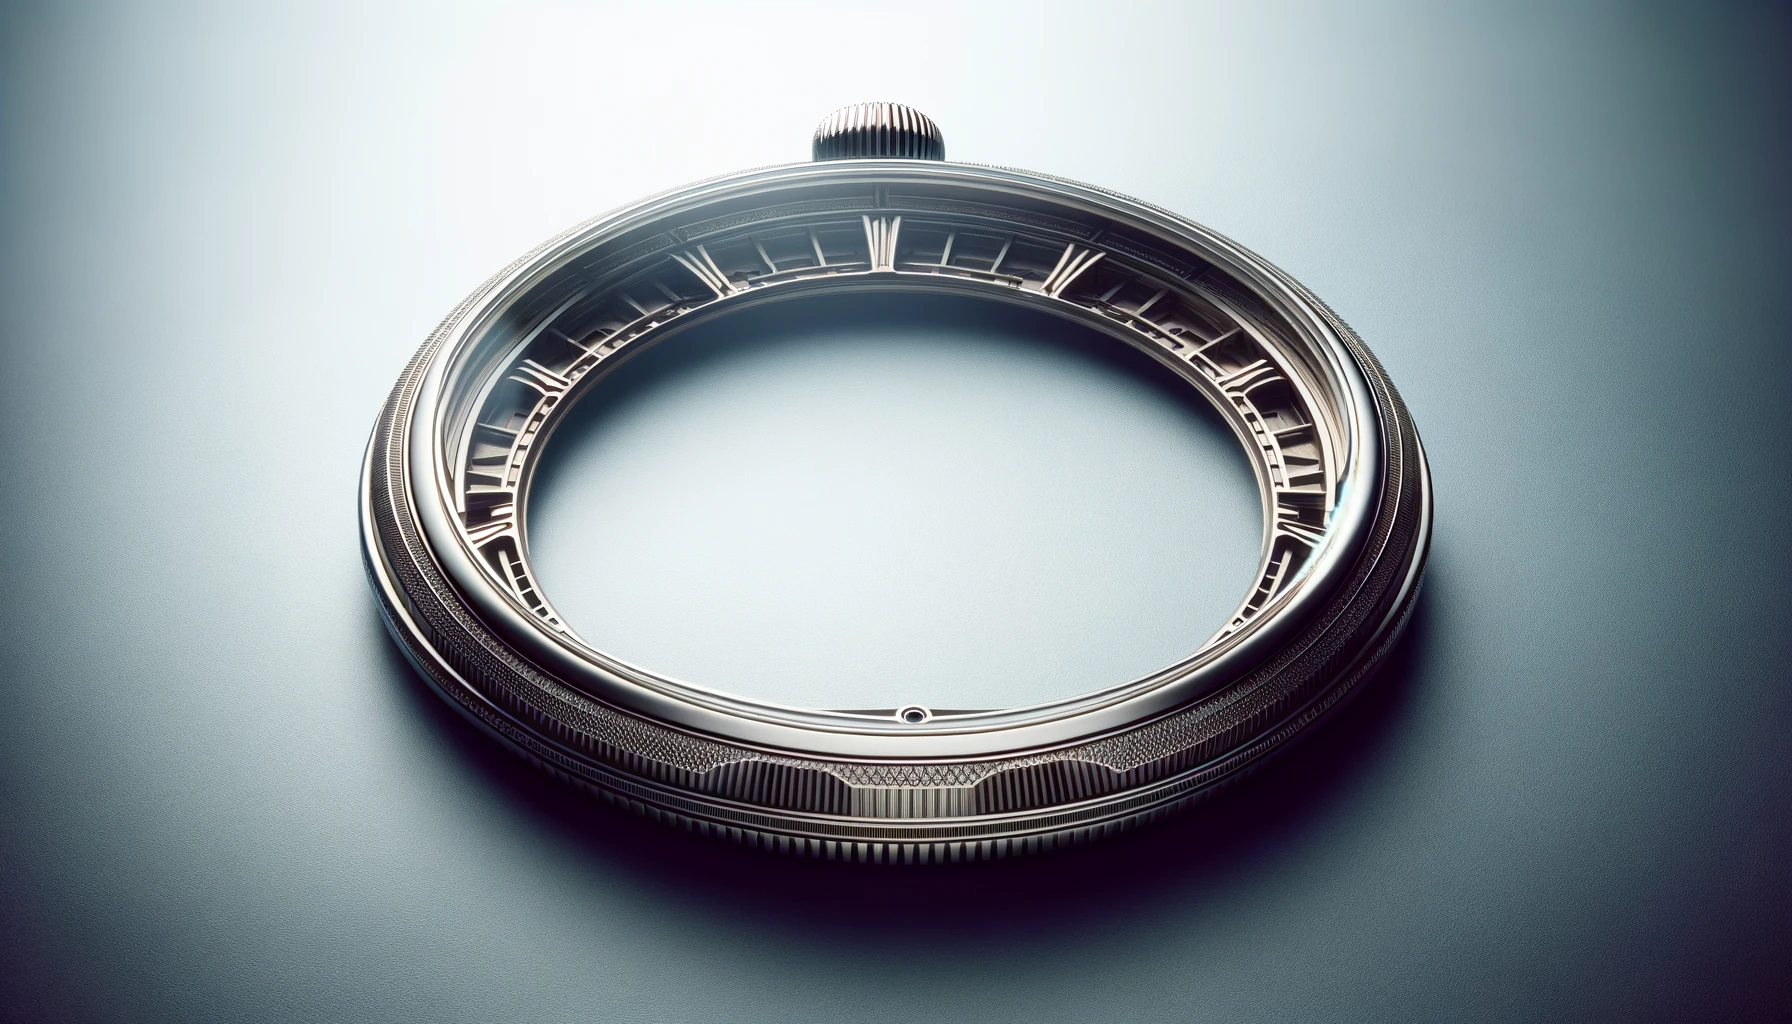 close-up of a bezel surrounding a watch face, showcasing intricate design details against a subtle background